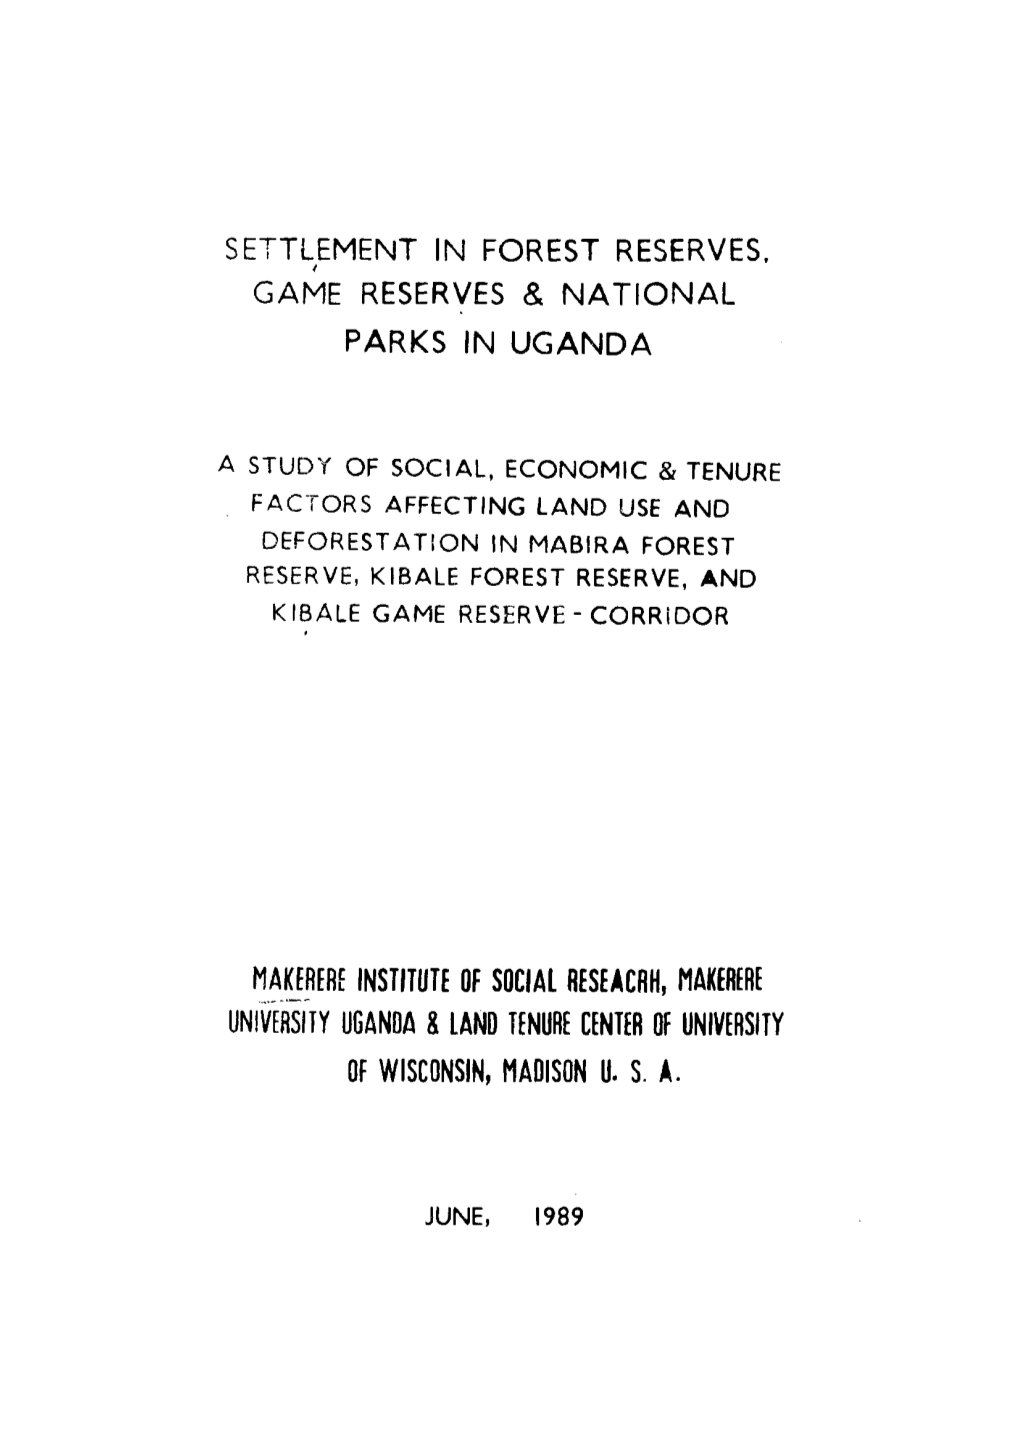 Settlement in Forest Reserves. Game Reserves & National Parks in Uganda